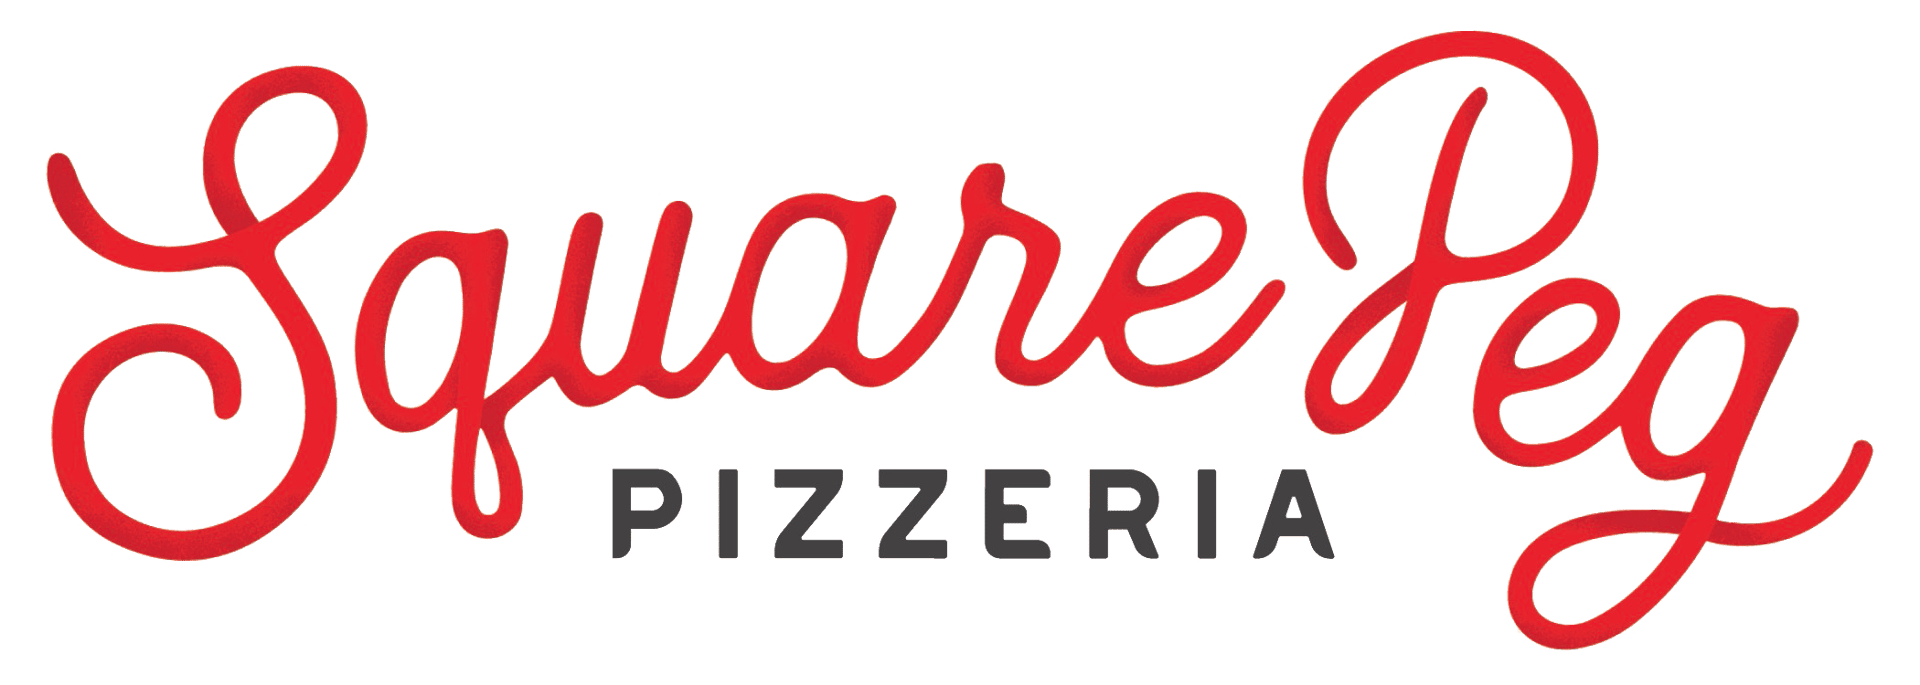 Square Peg Pizzeria